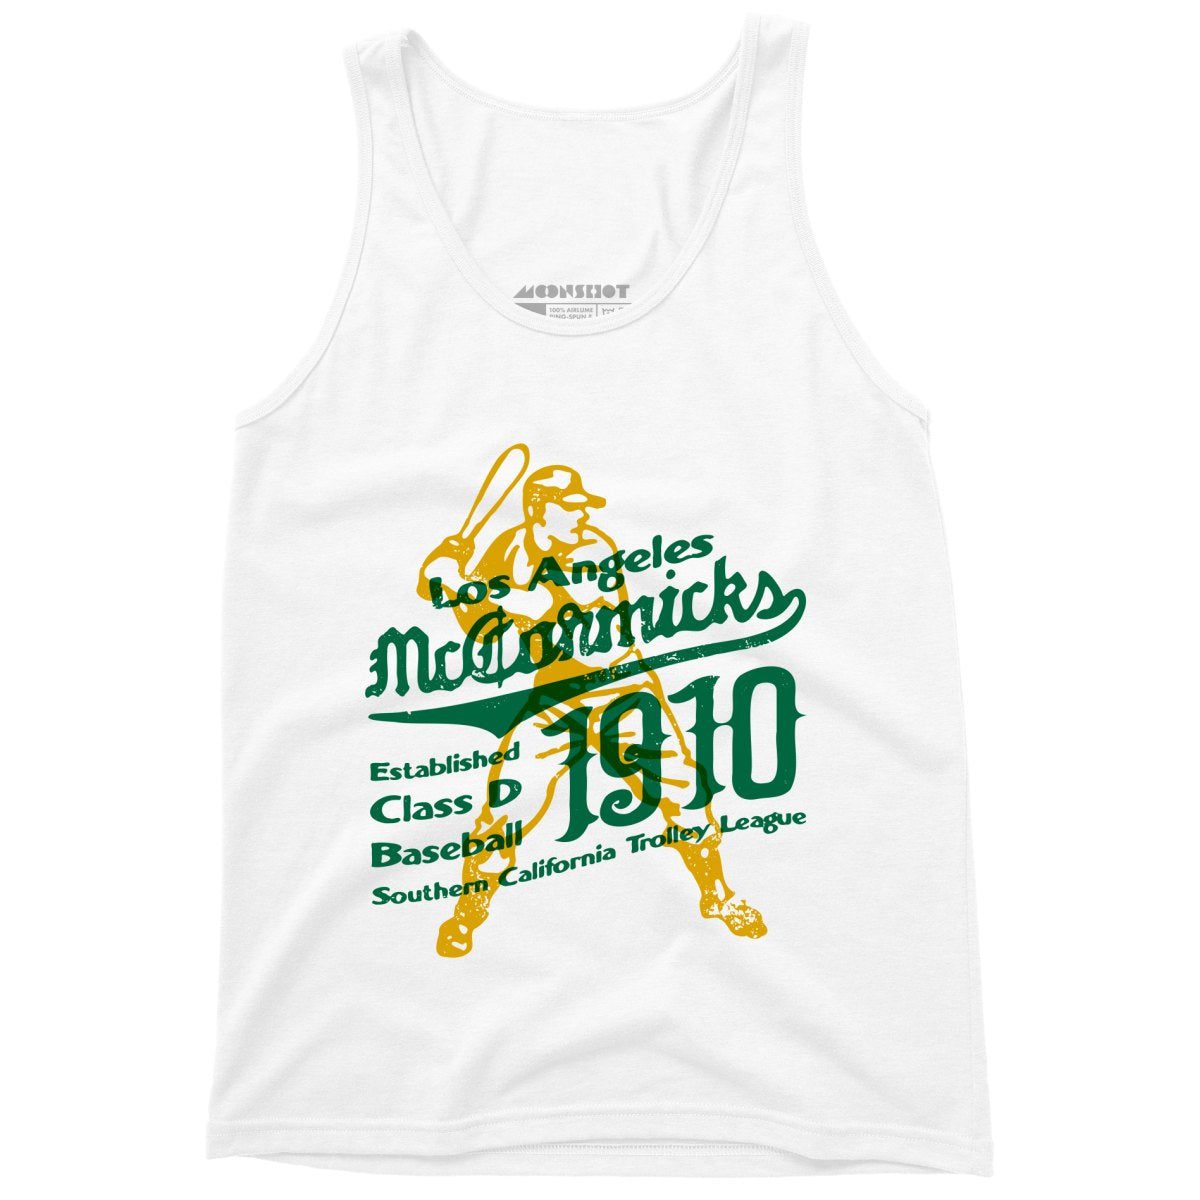 Los Angeles McCormick's - California - Vintage Defunct Baseball Teams - Unisex Tank Top